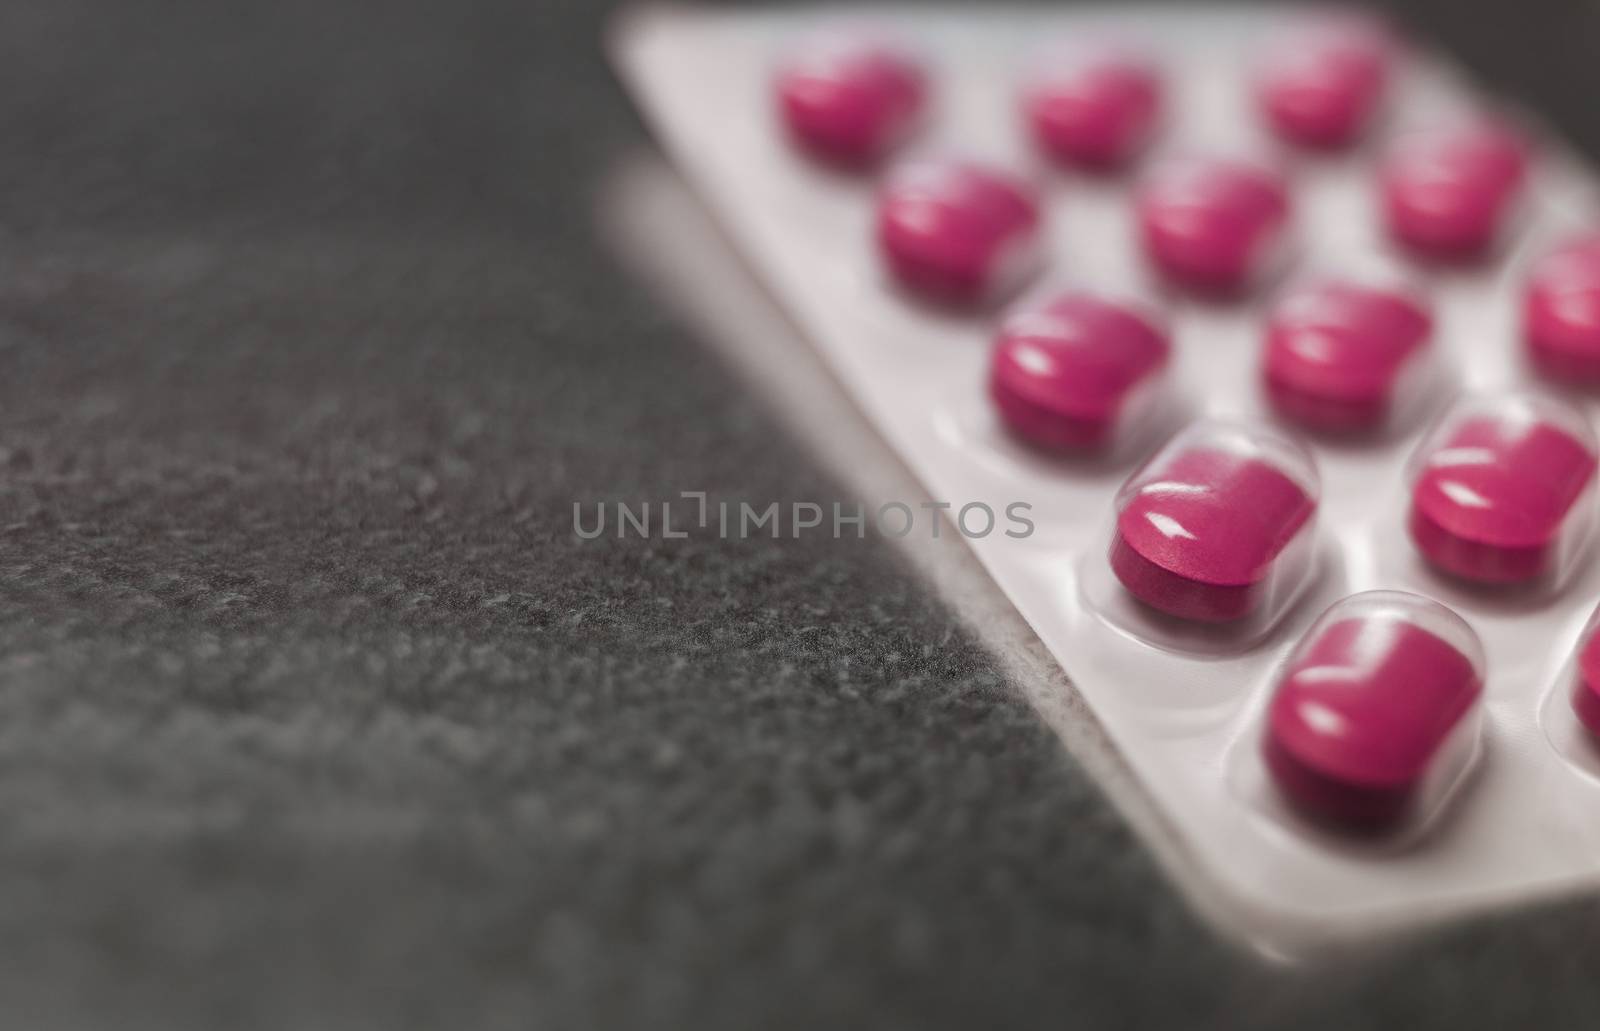 Blister pack of Pink medicine pills Close up by gemenacom